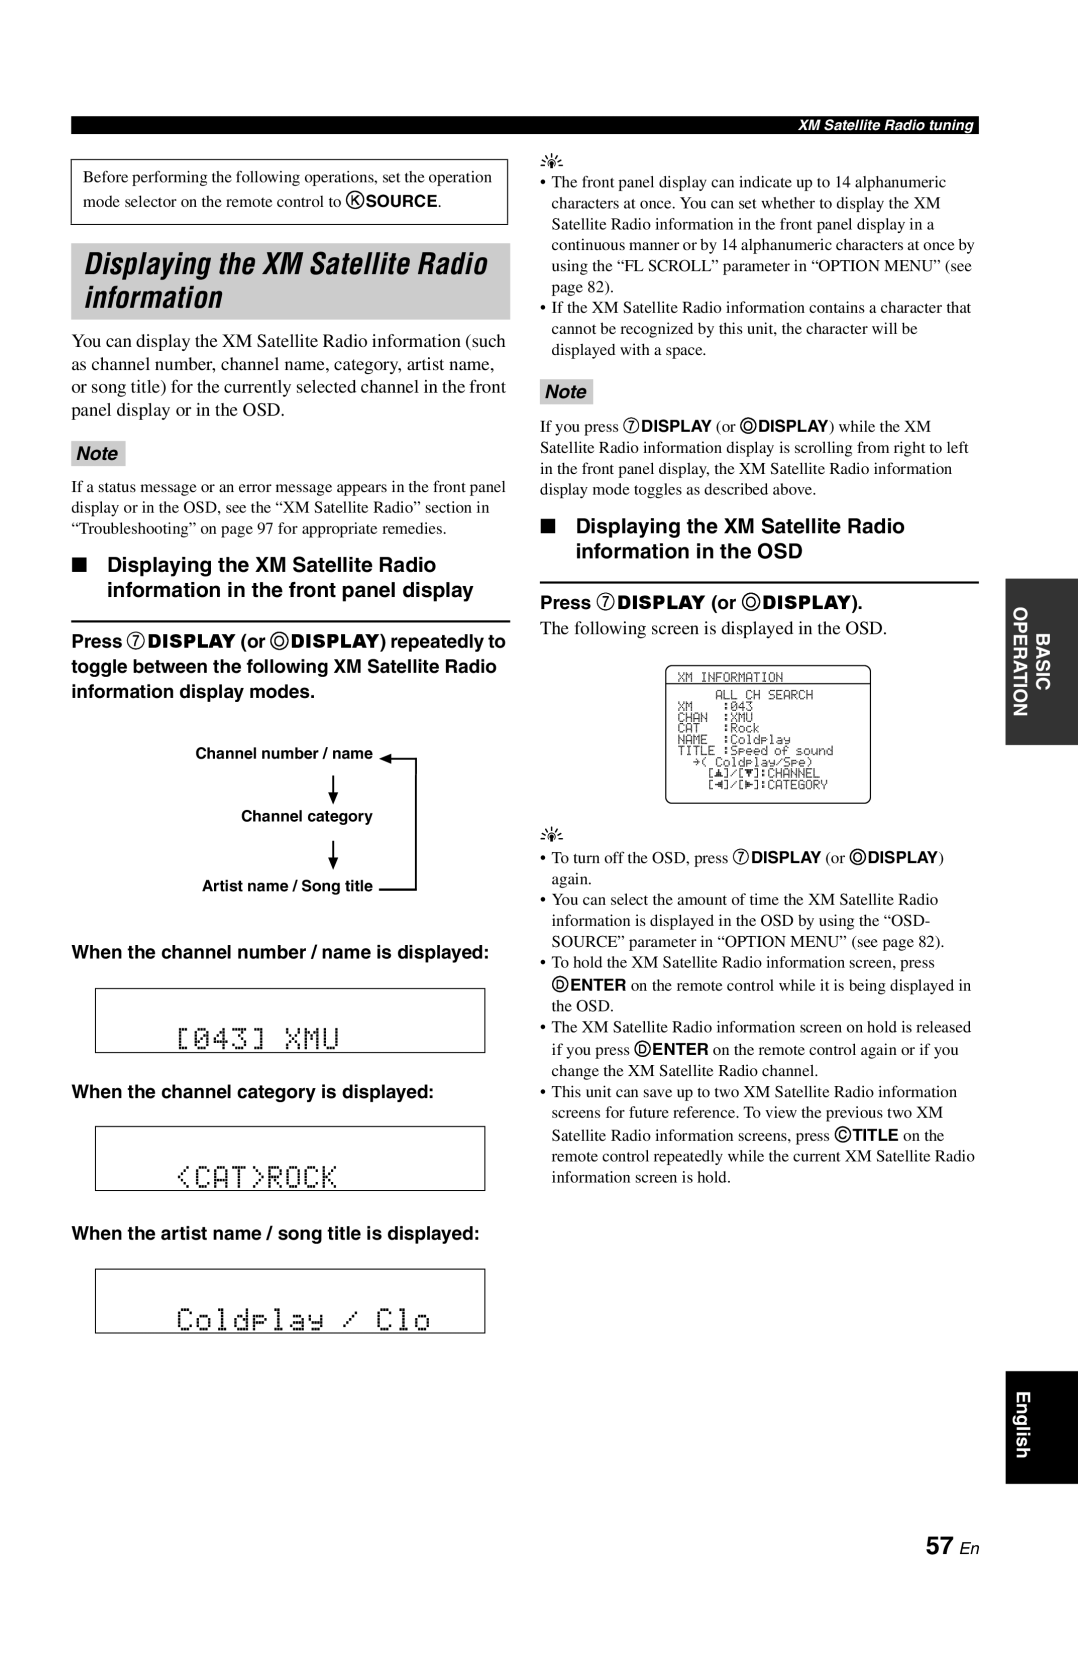 Yamaha RX-V861 owner manual Displaying the XM Satellite Radio information, Coldplay / Clo, <Cat>Rock, 57 En, 043 XMU 